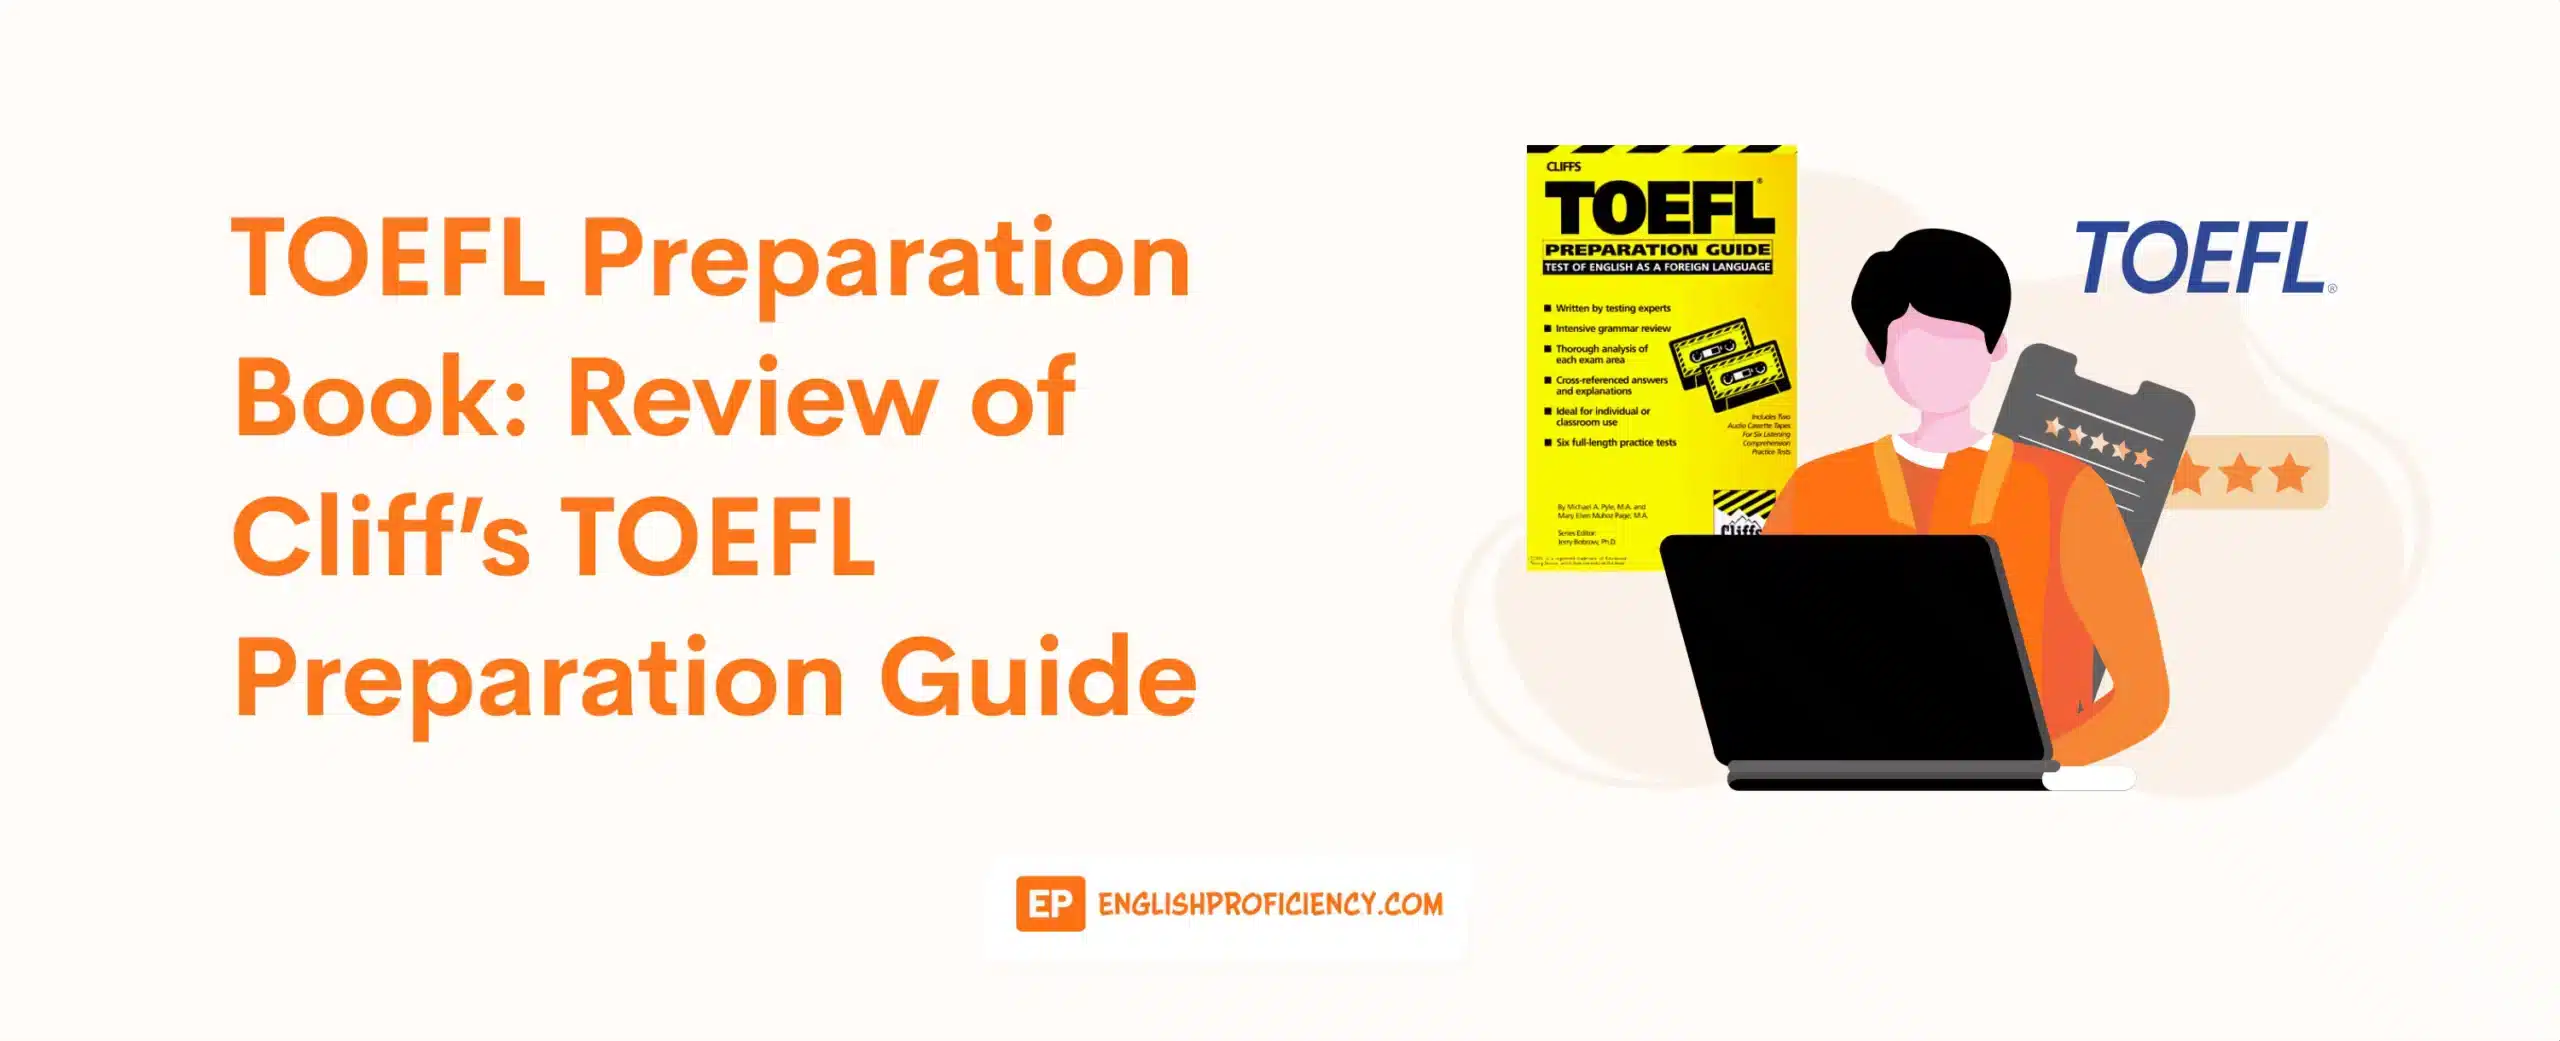 TOEFL Preparation Book Review of Cliff’s TOEFL Preparation Guide